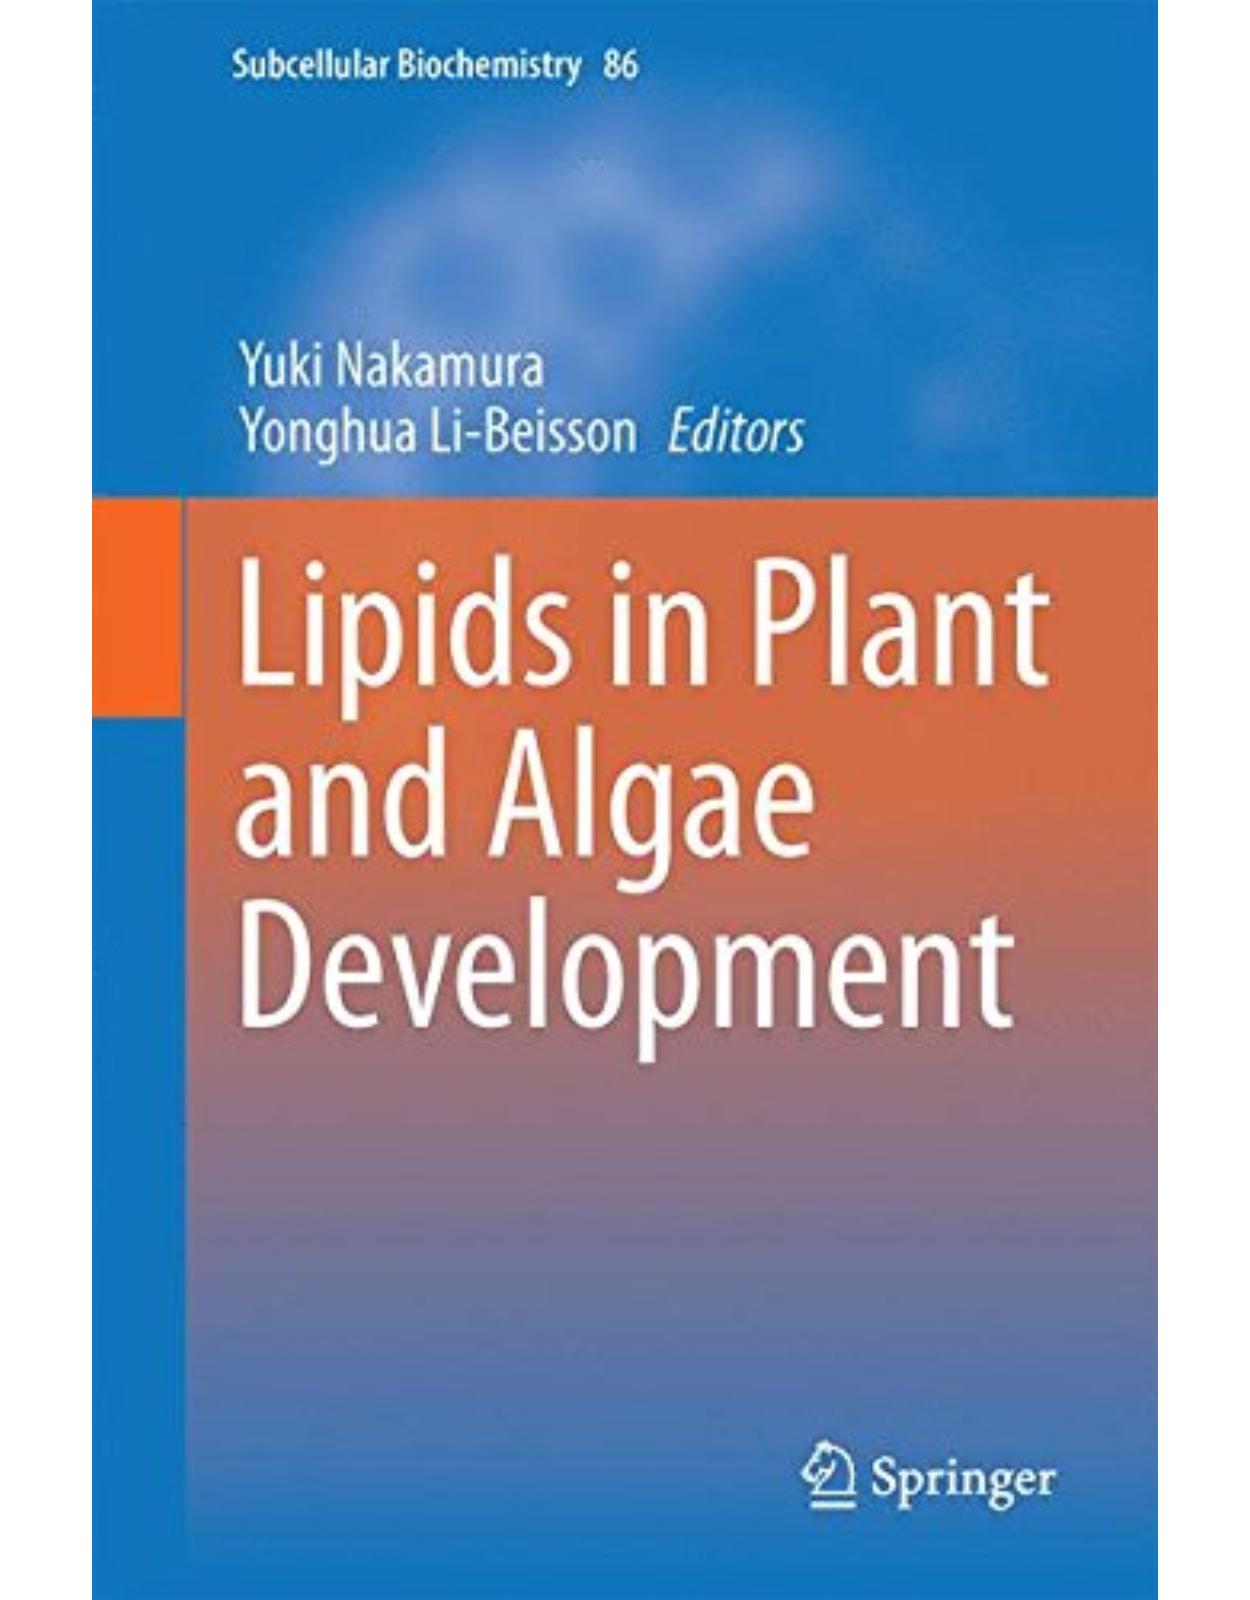 Lipids in Plant and Algae Development